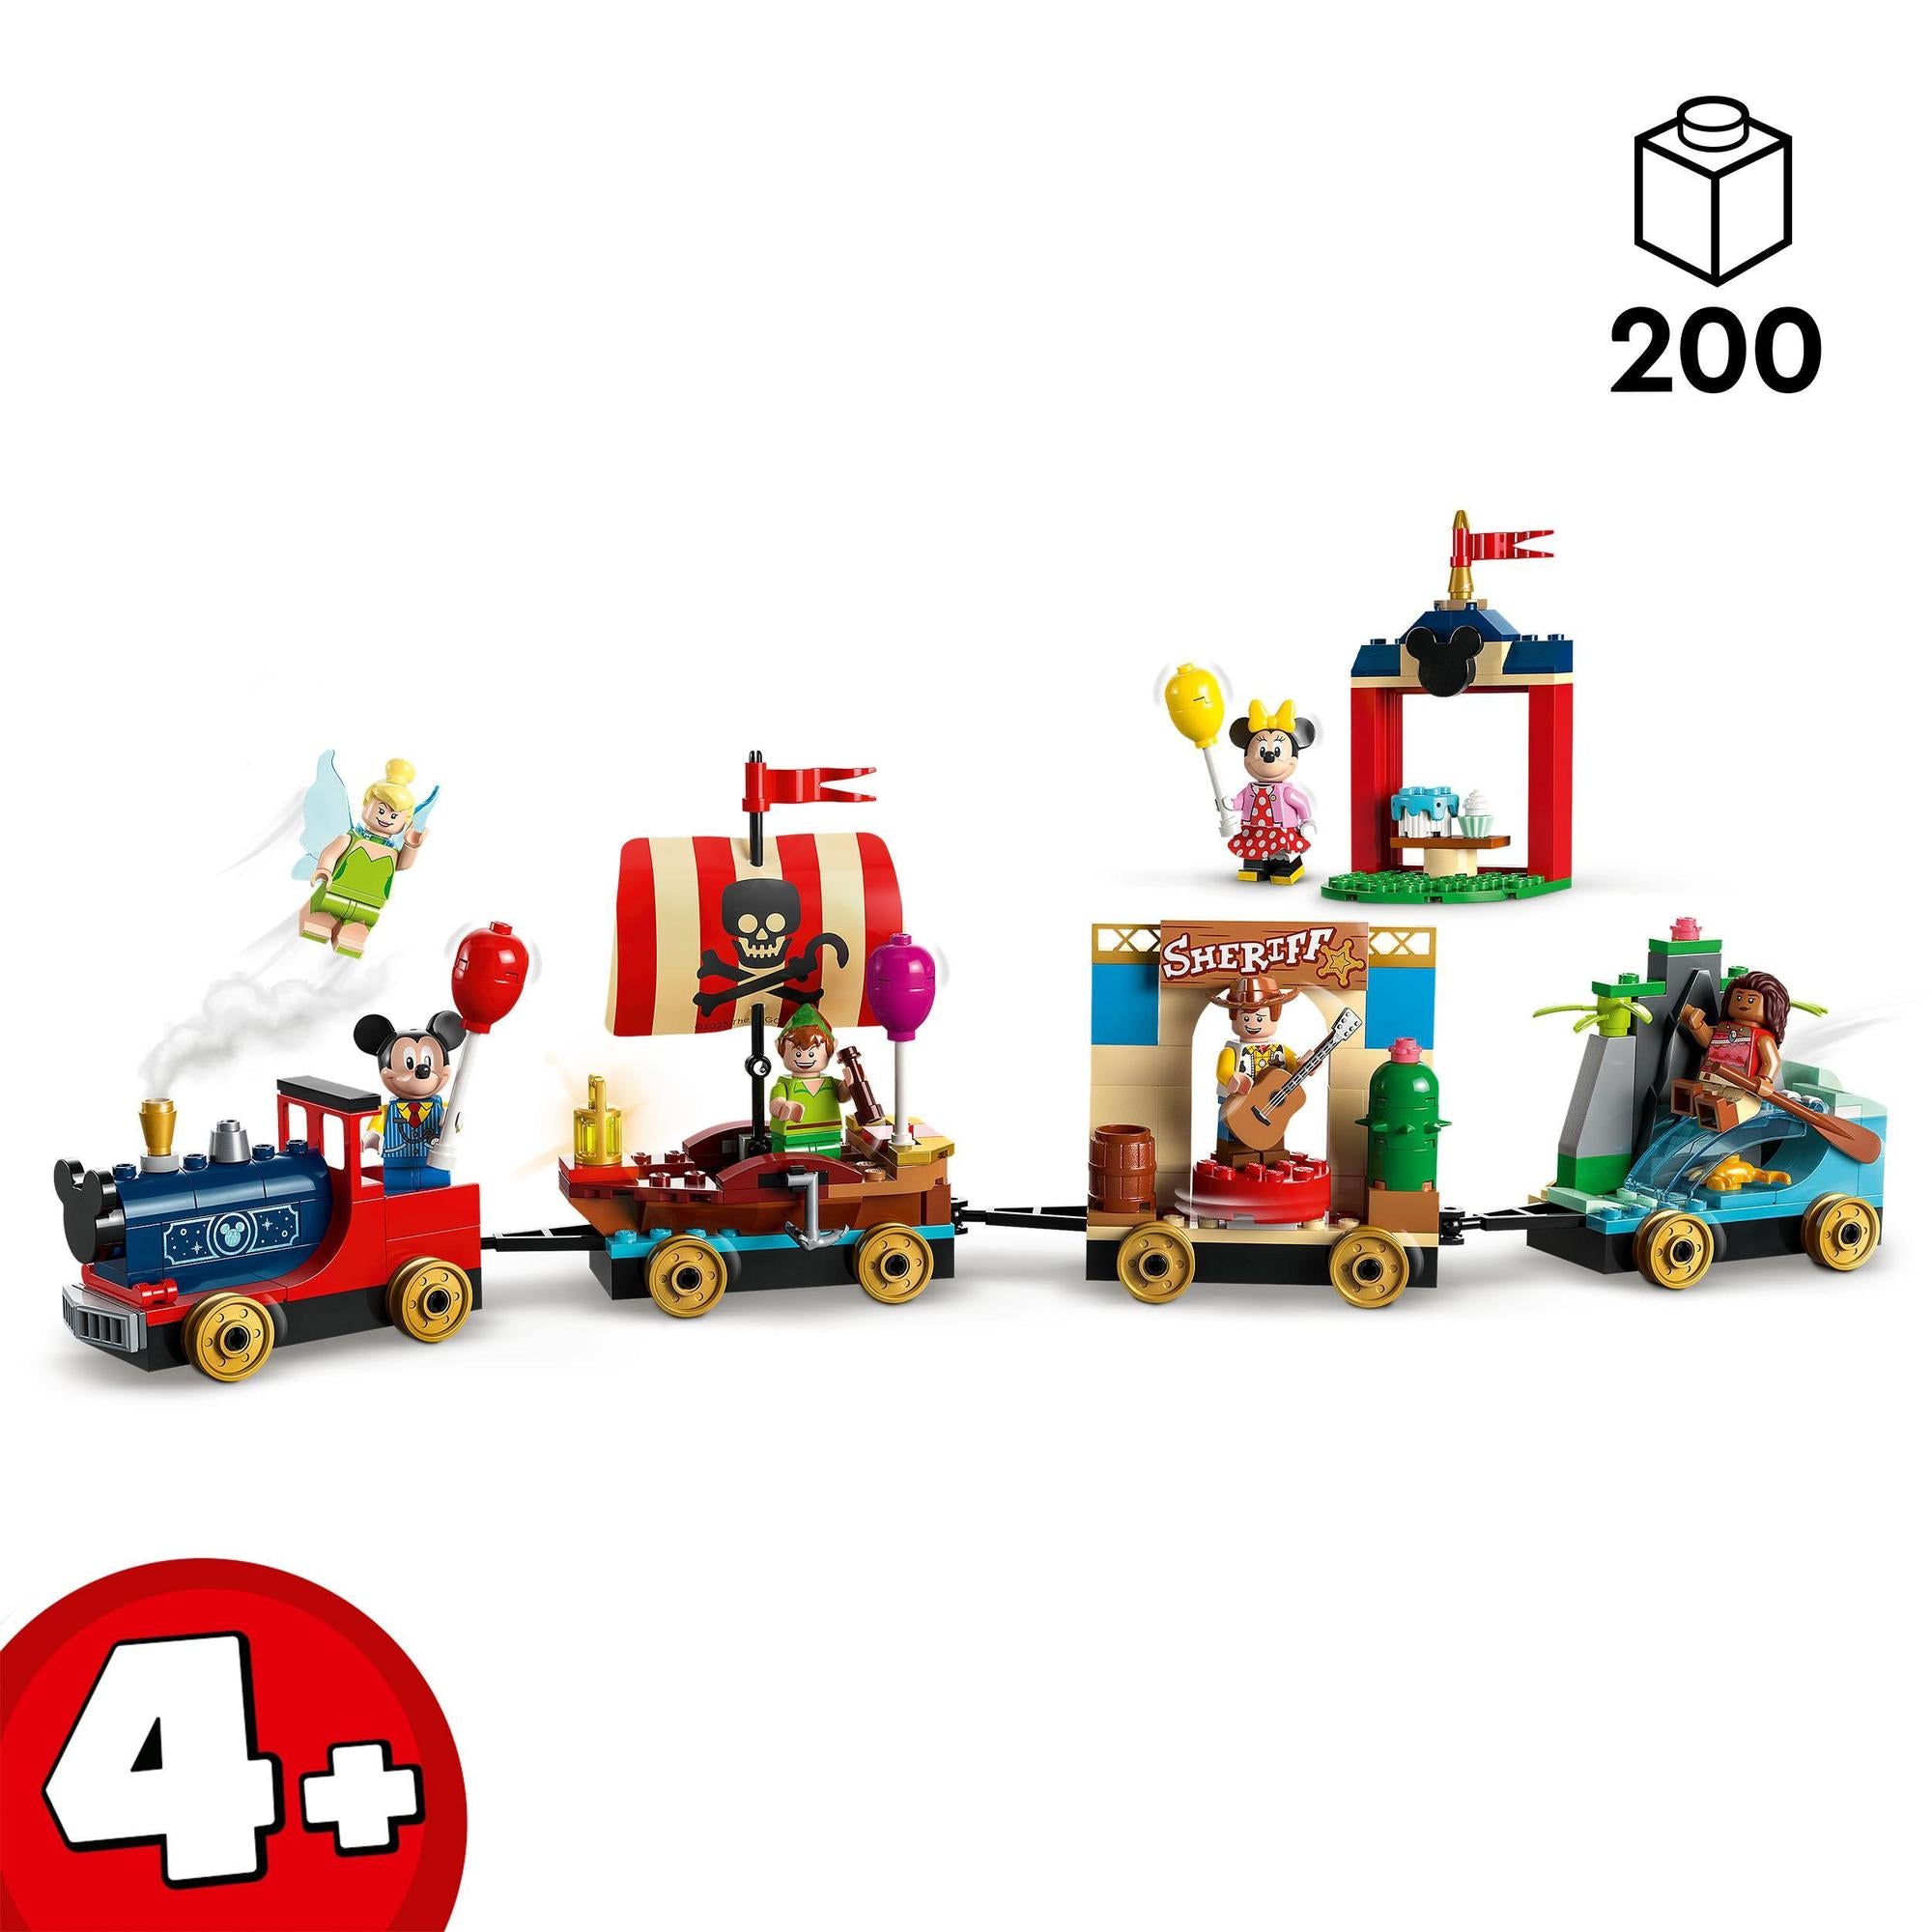 LEGO® | 43212 | Disney Geburtstagszug